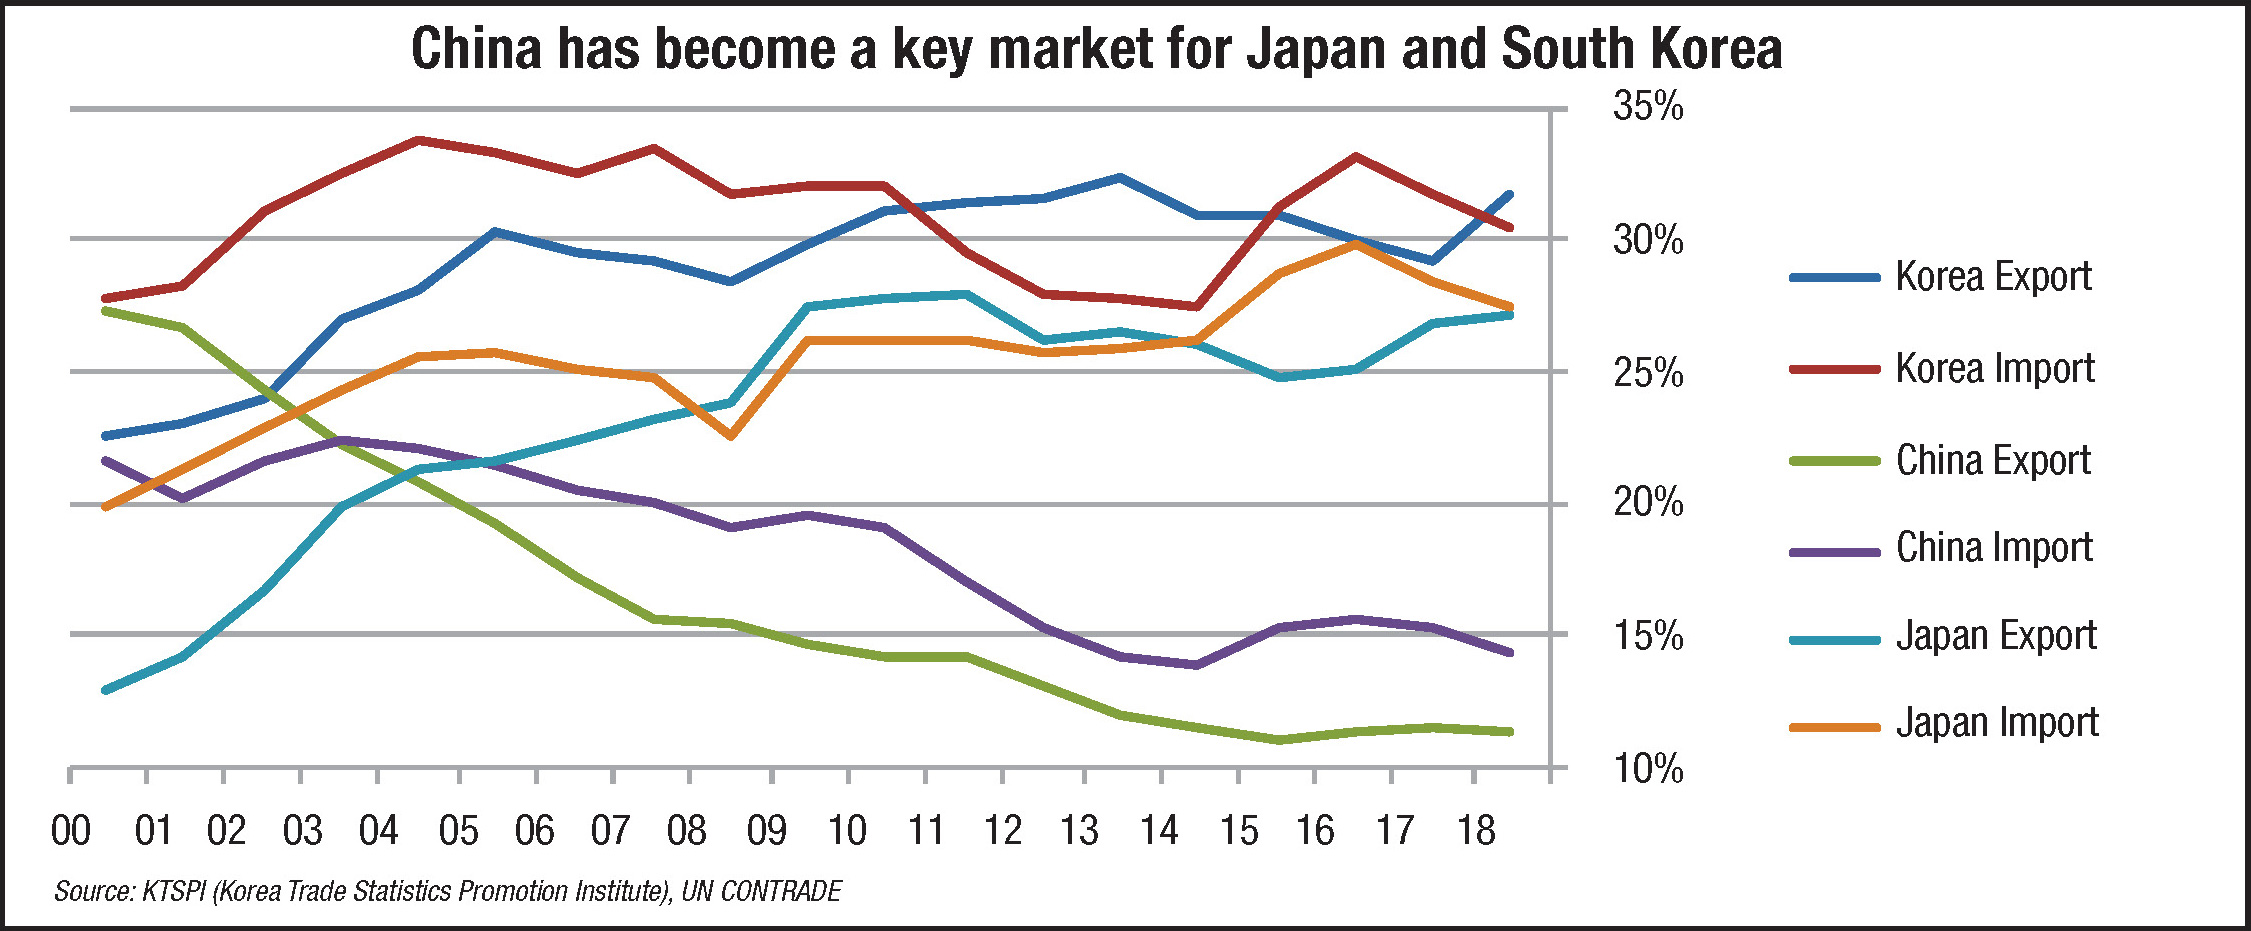 China has become a key market for Japan and South Korea